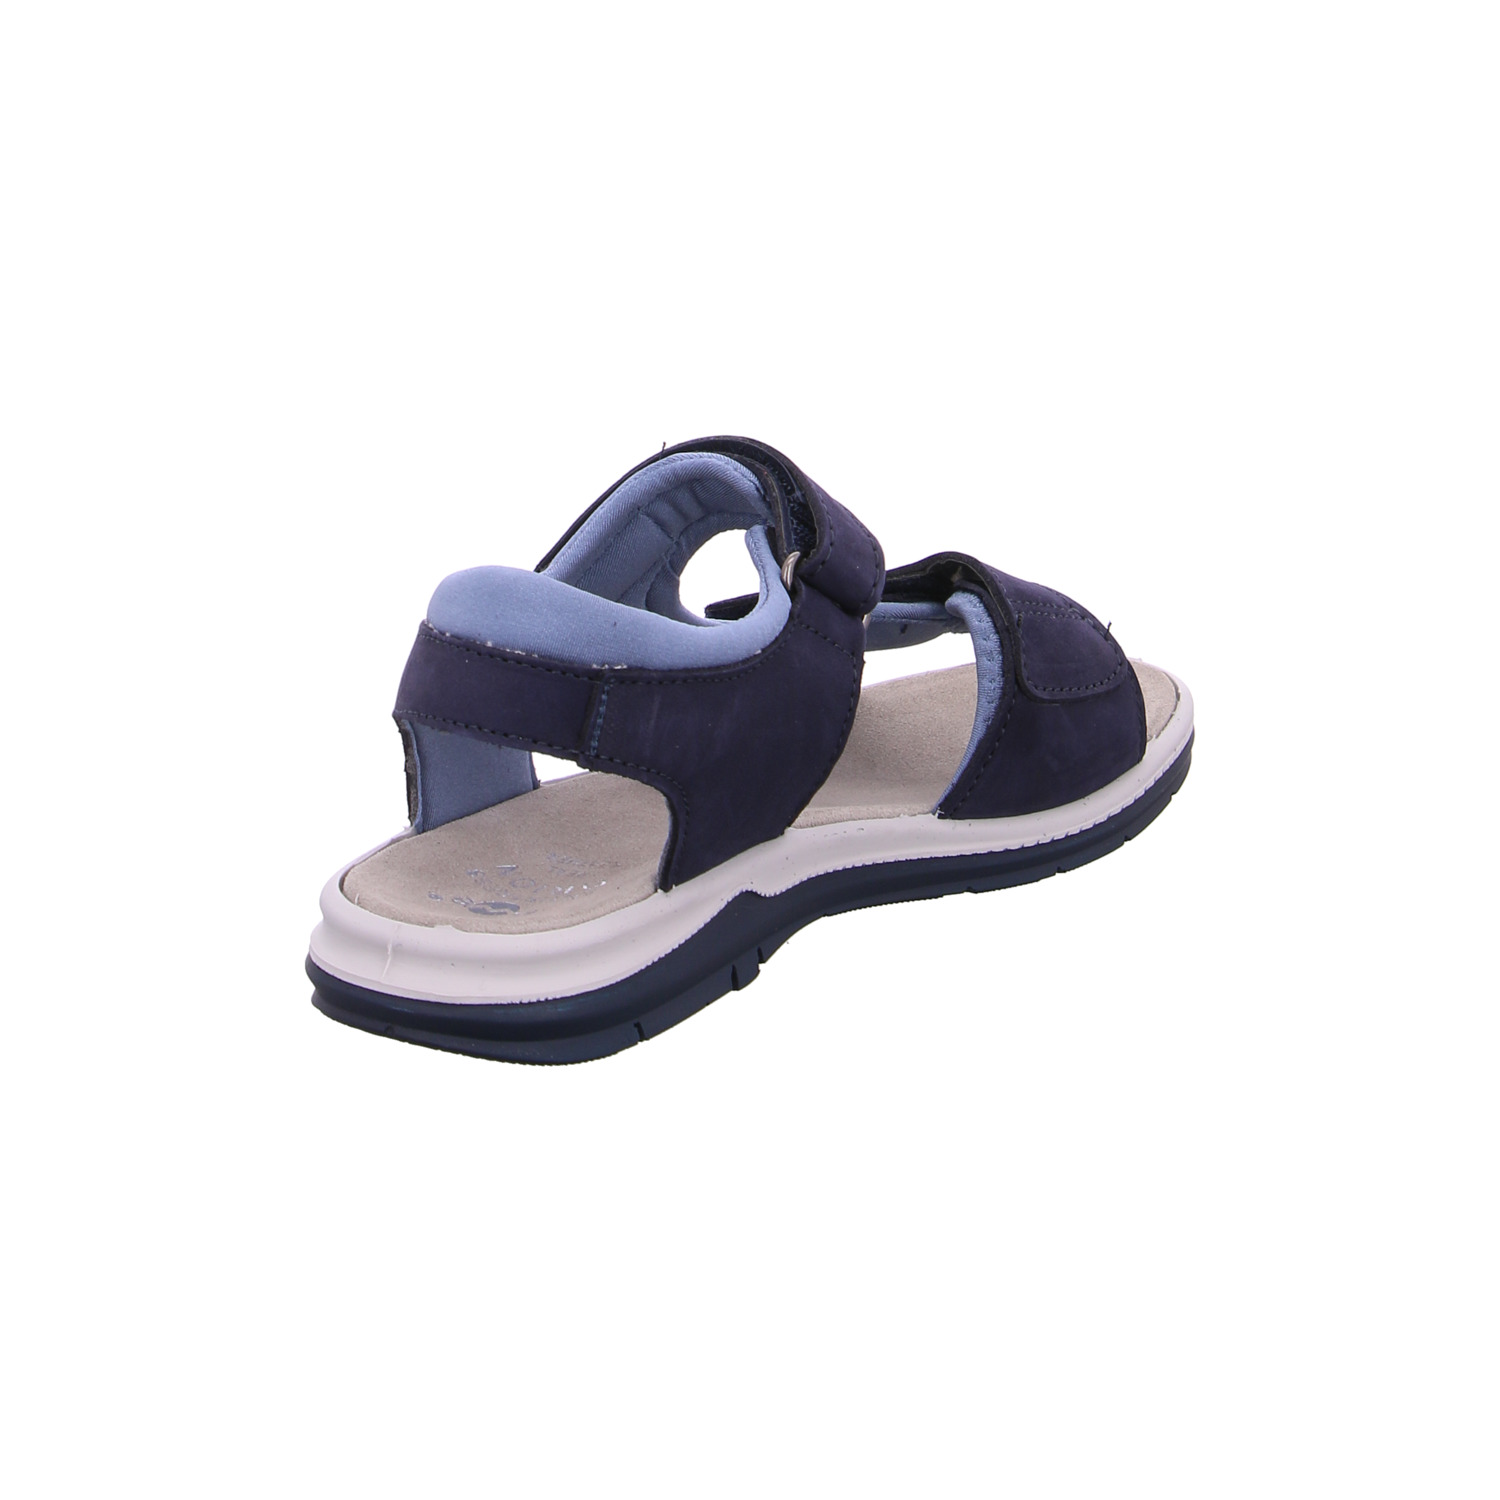 orion-sandale-blau_122543-28